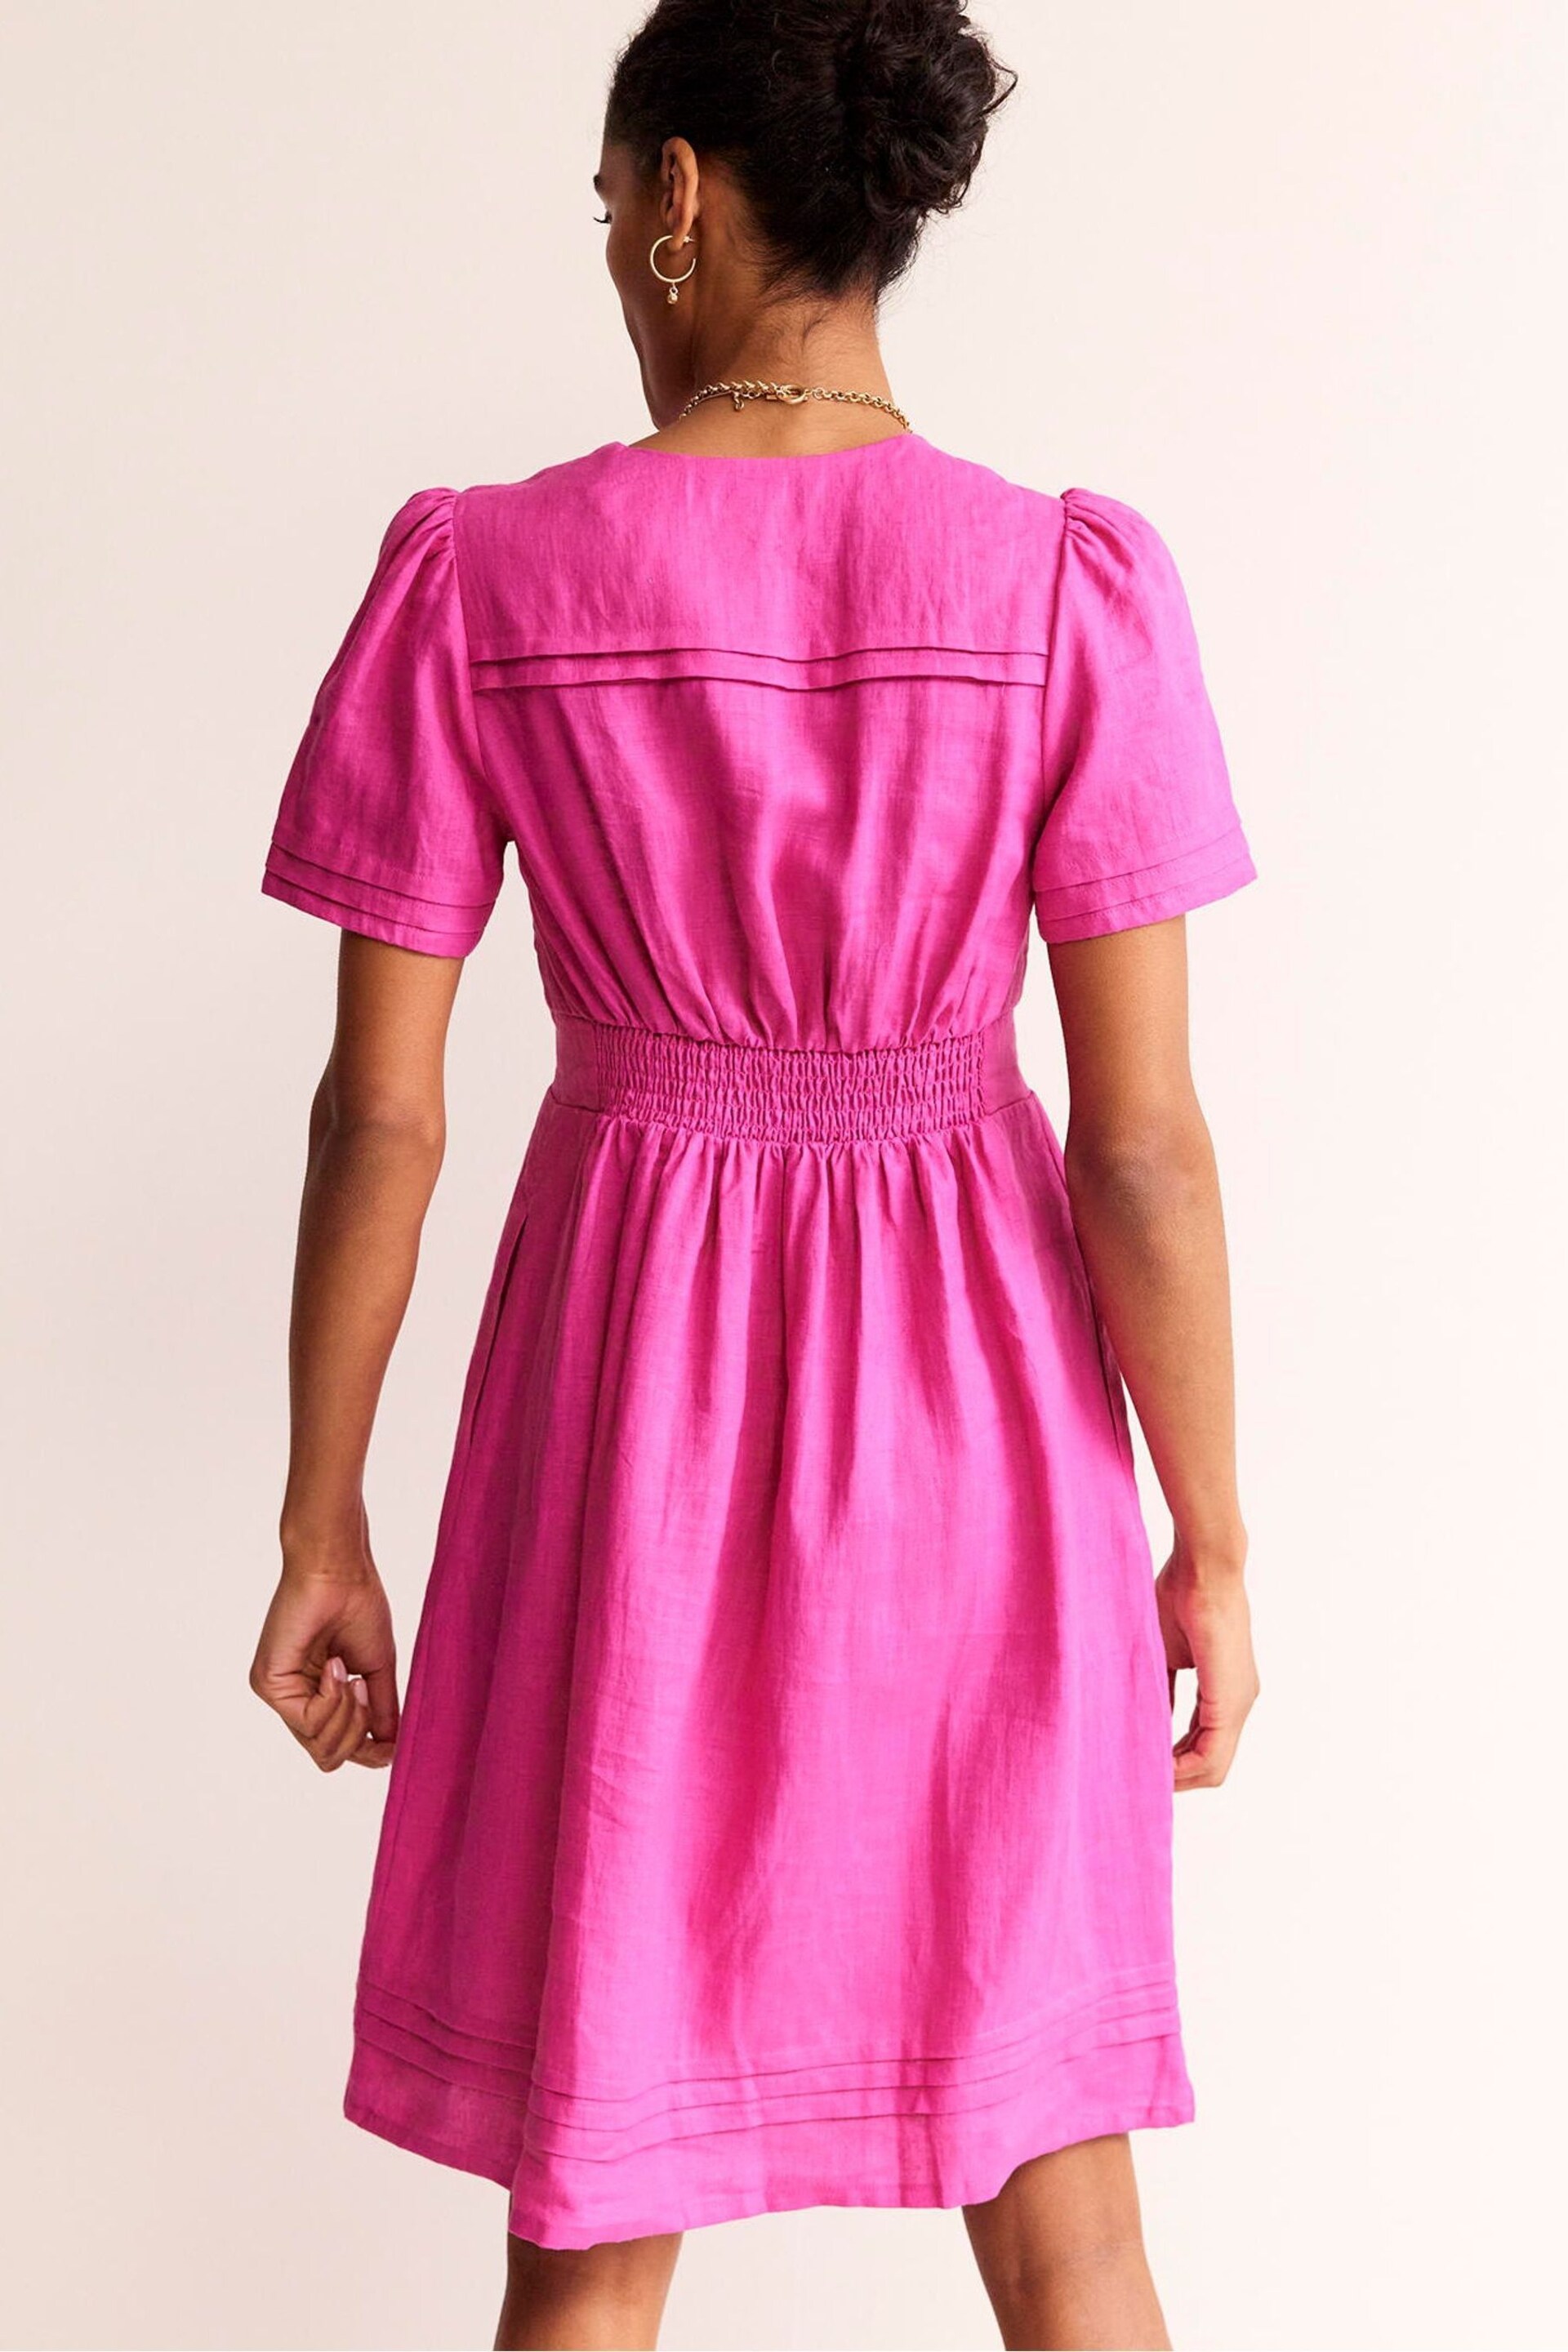 Boden Pink Petite Eve Linen Short Dress - Image 2 of 4